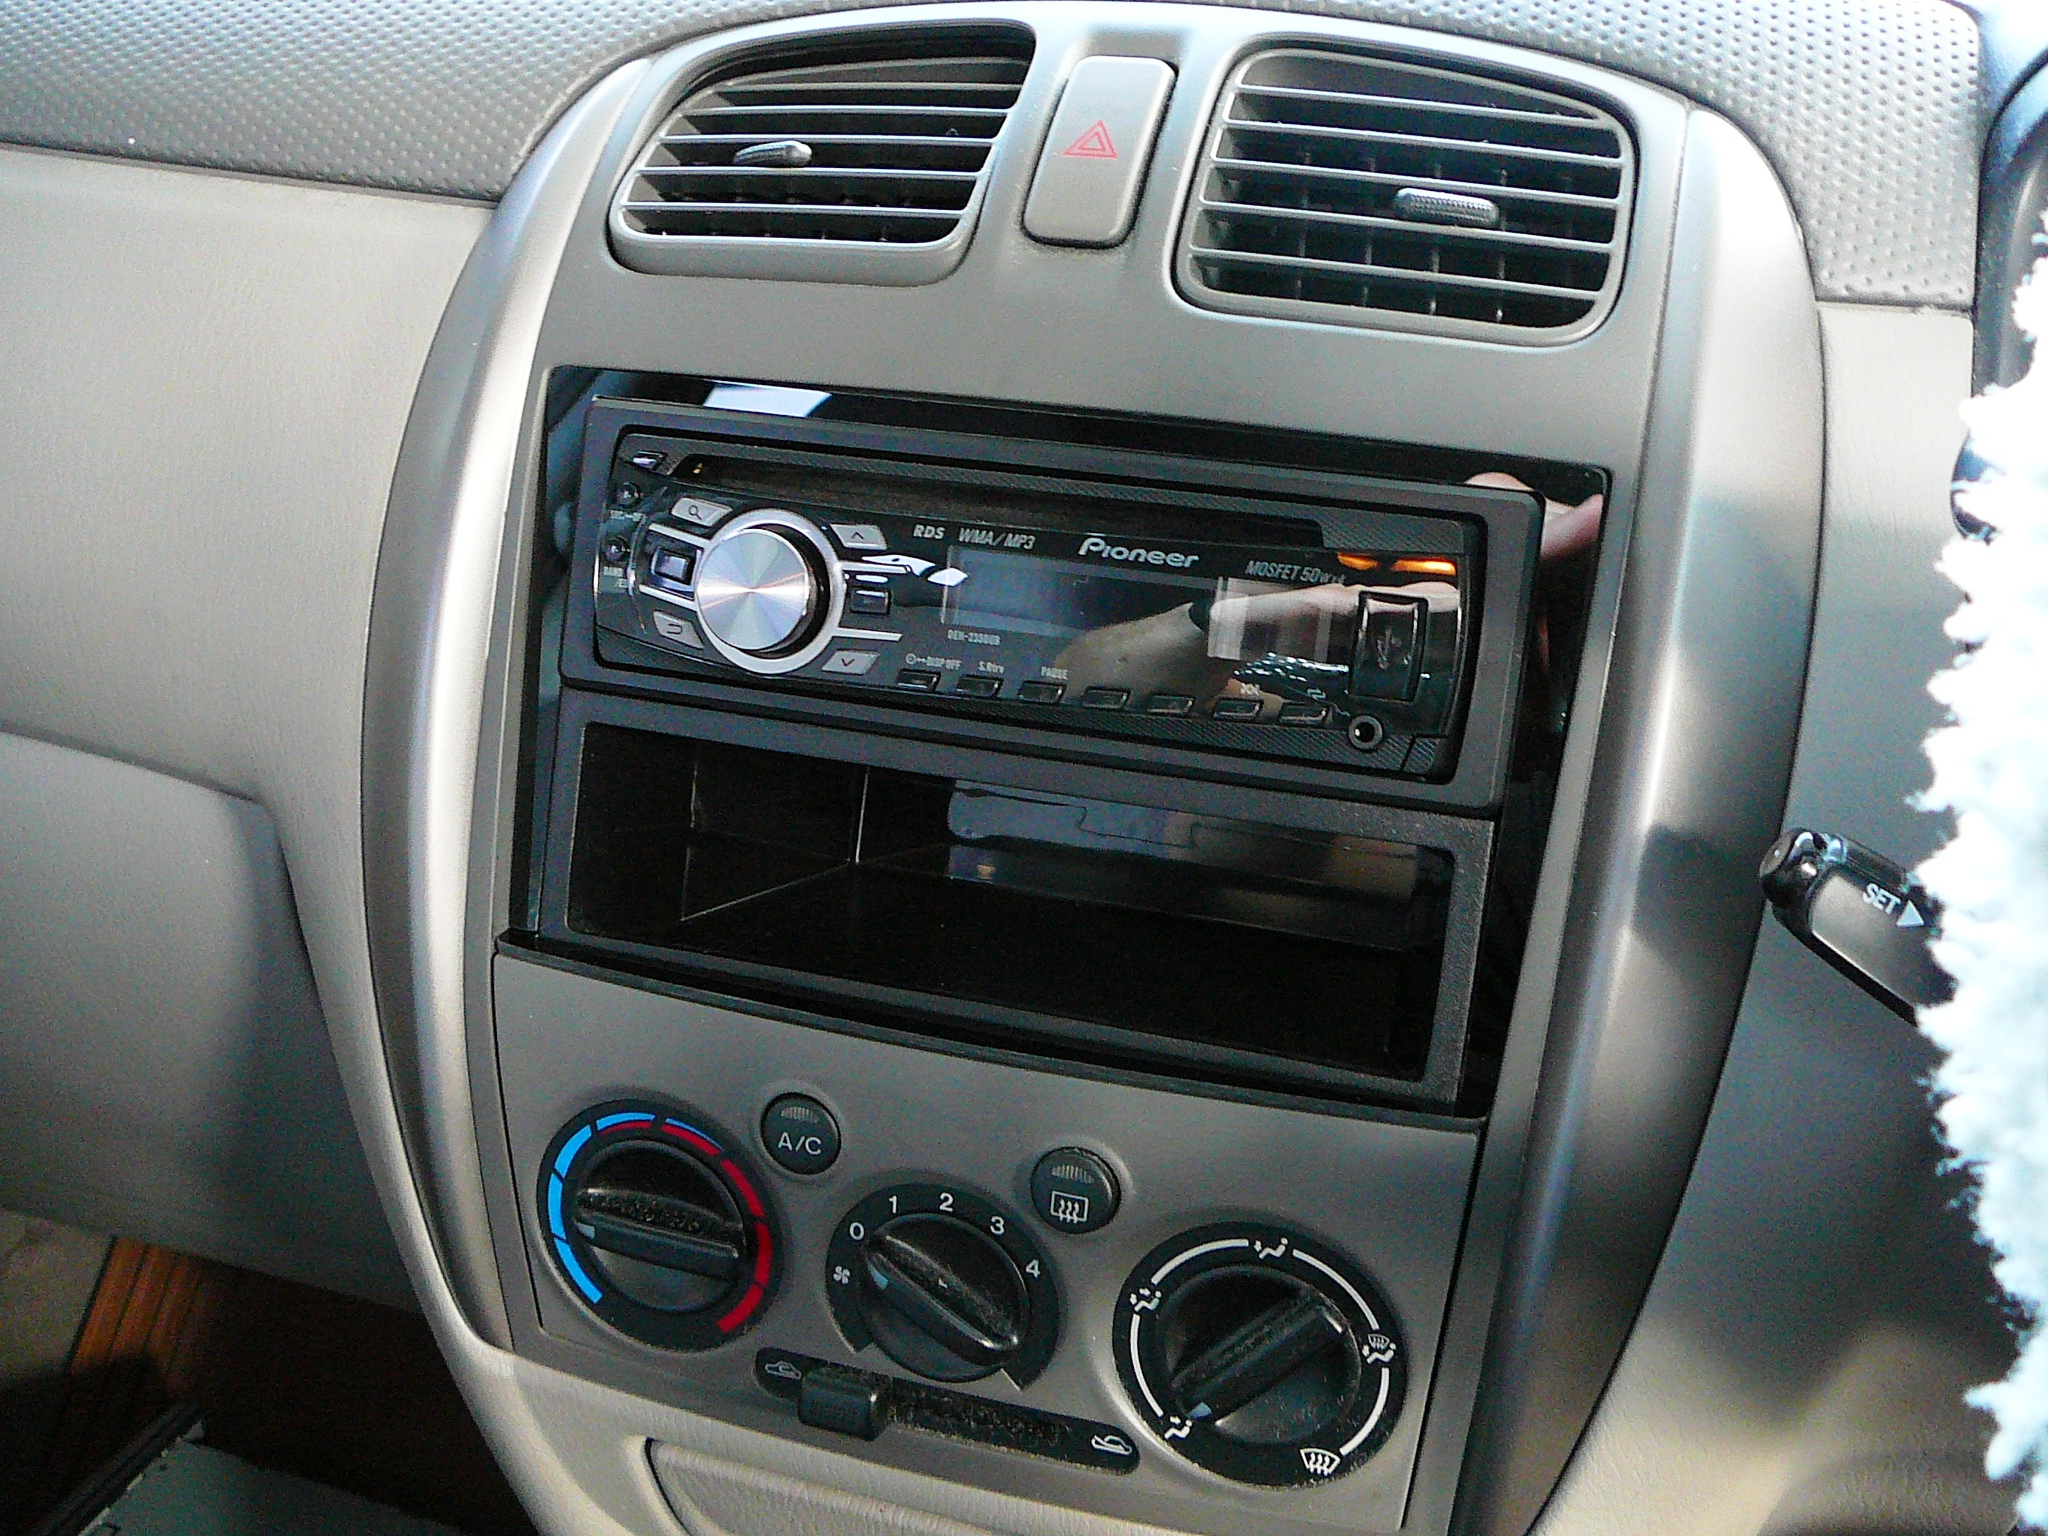 Mazda Premacy, installation of a CD radio and custom trim